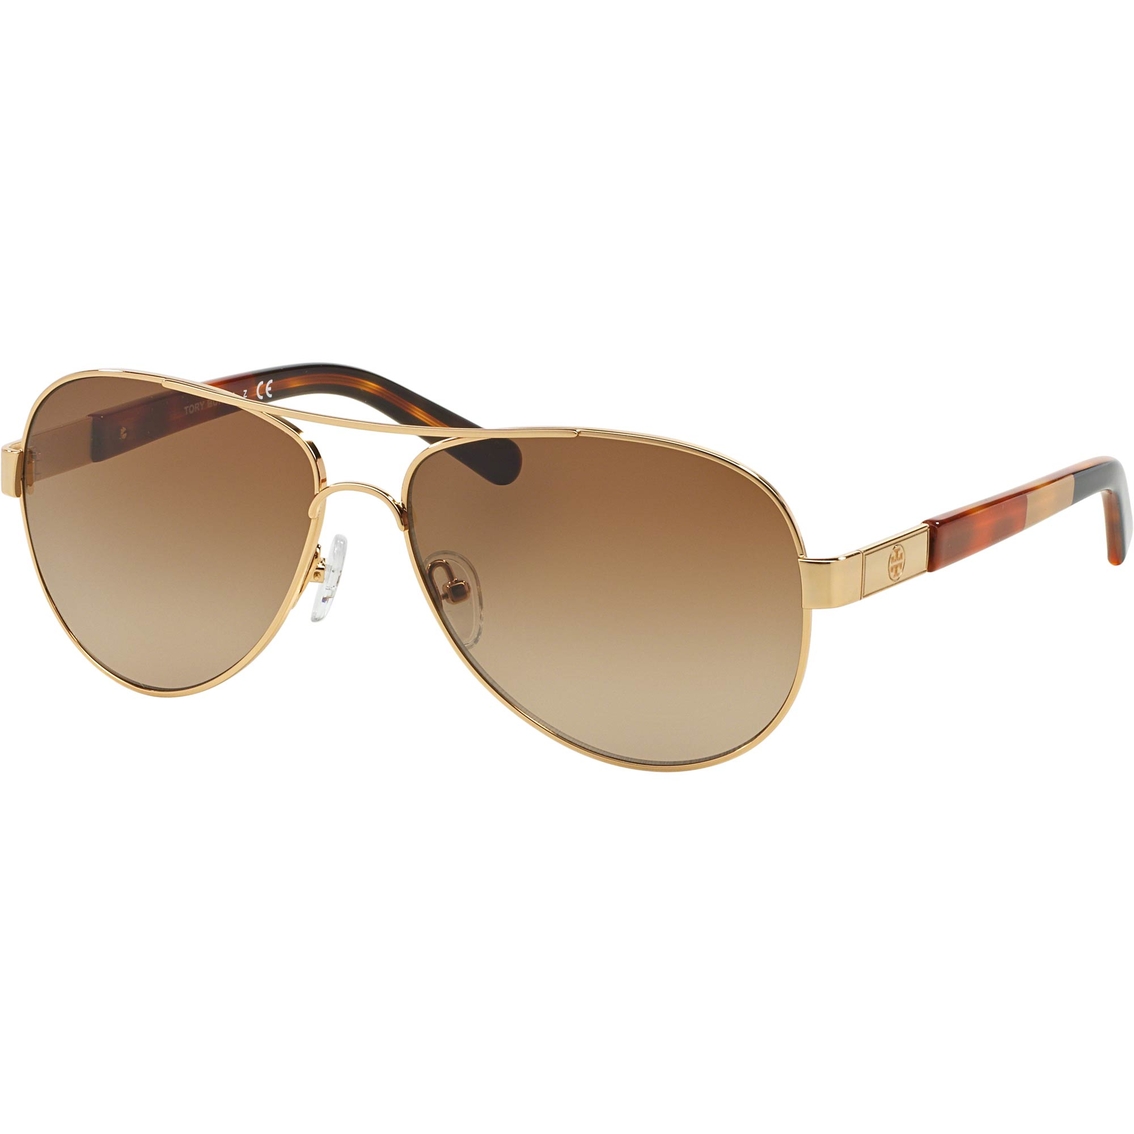 Tory Burch Sunglasses 0ty6010 | Women's Sunglasses | Clothing